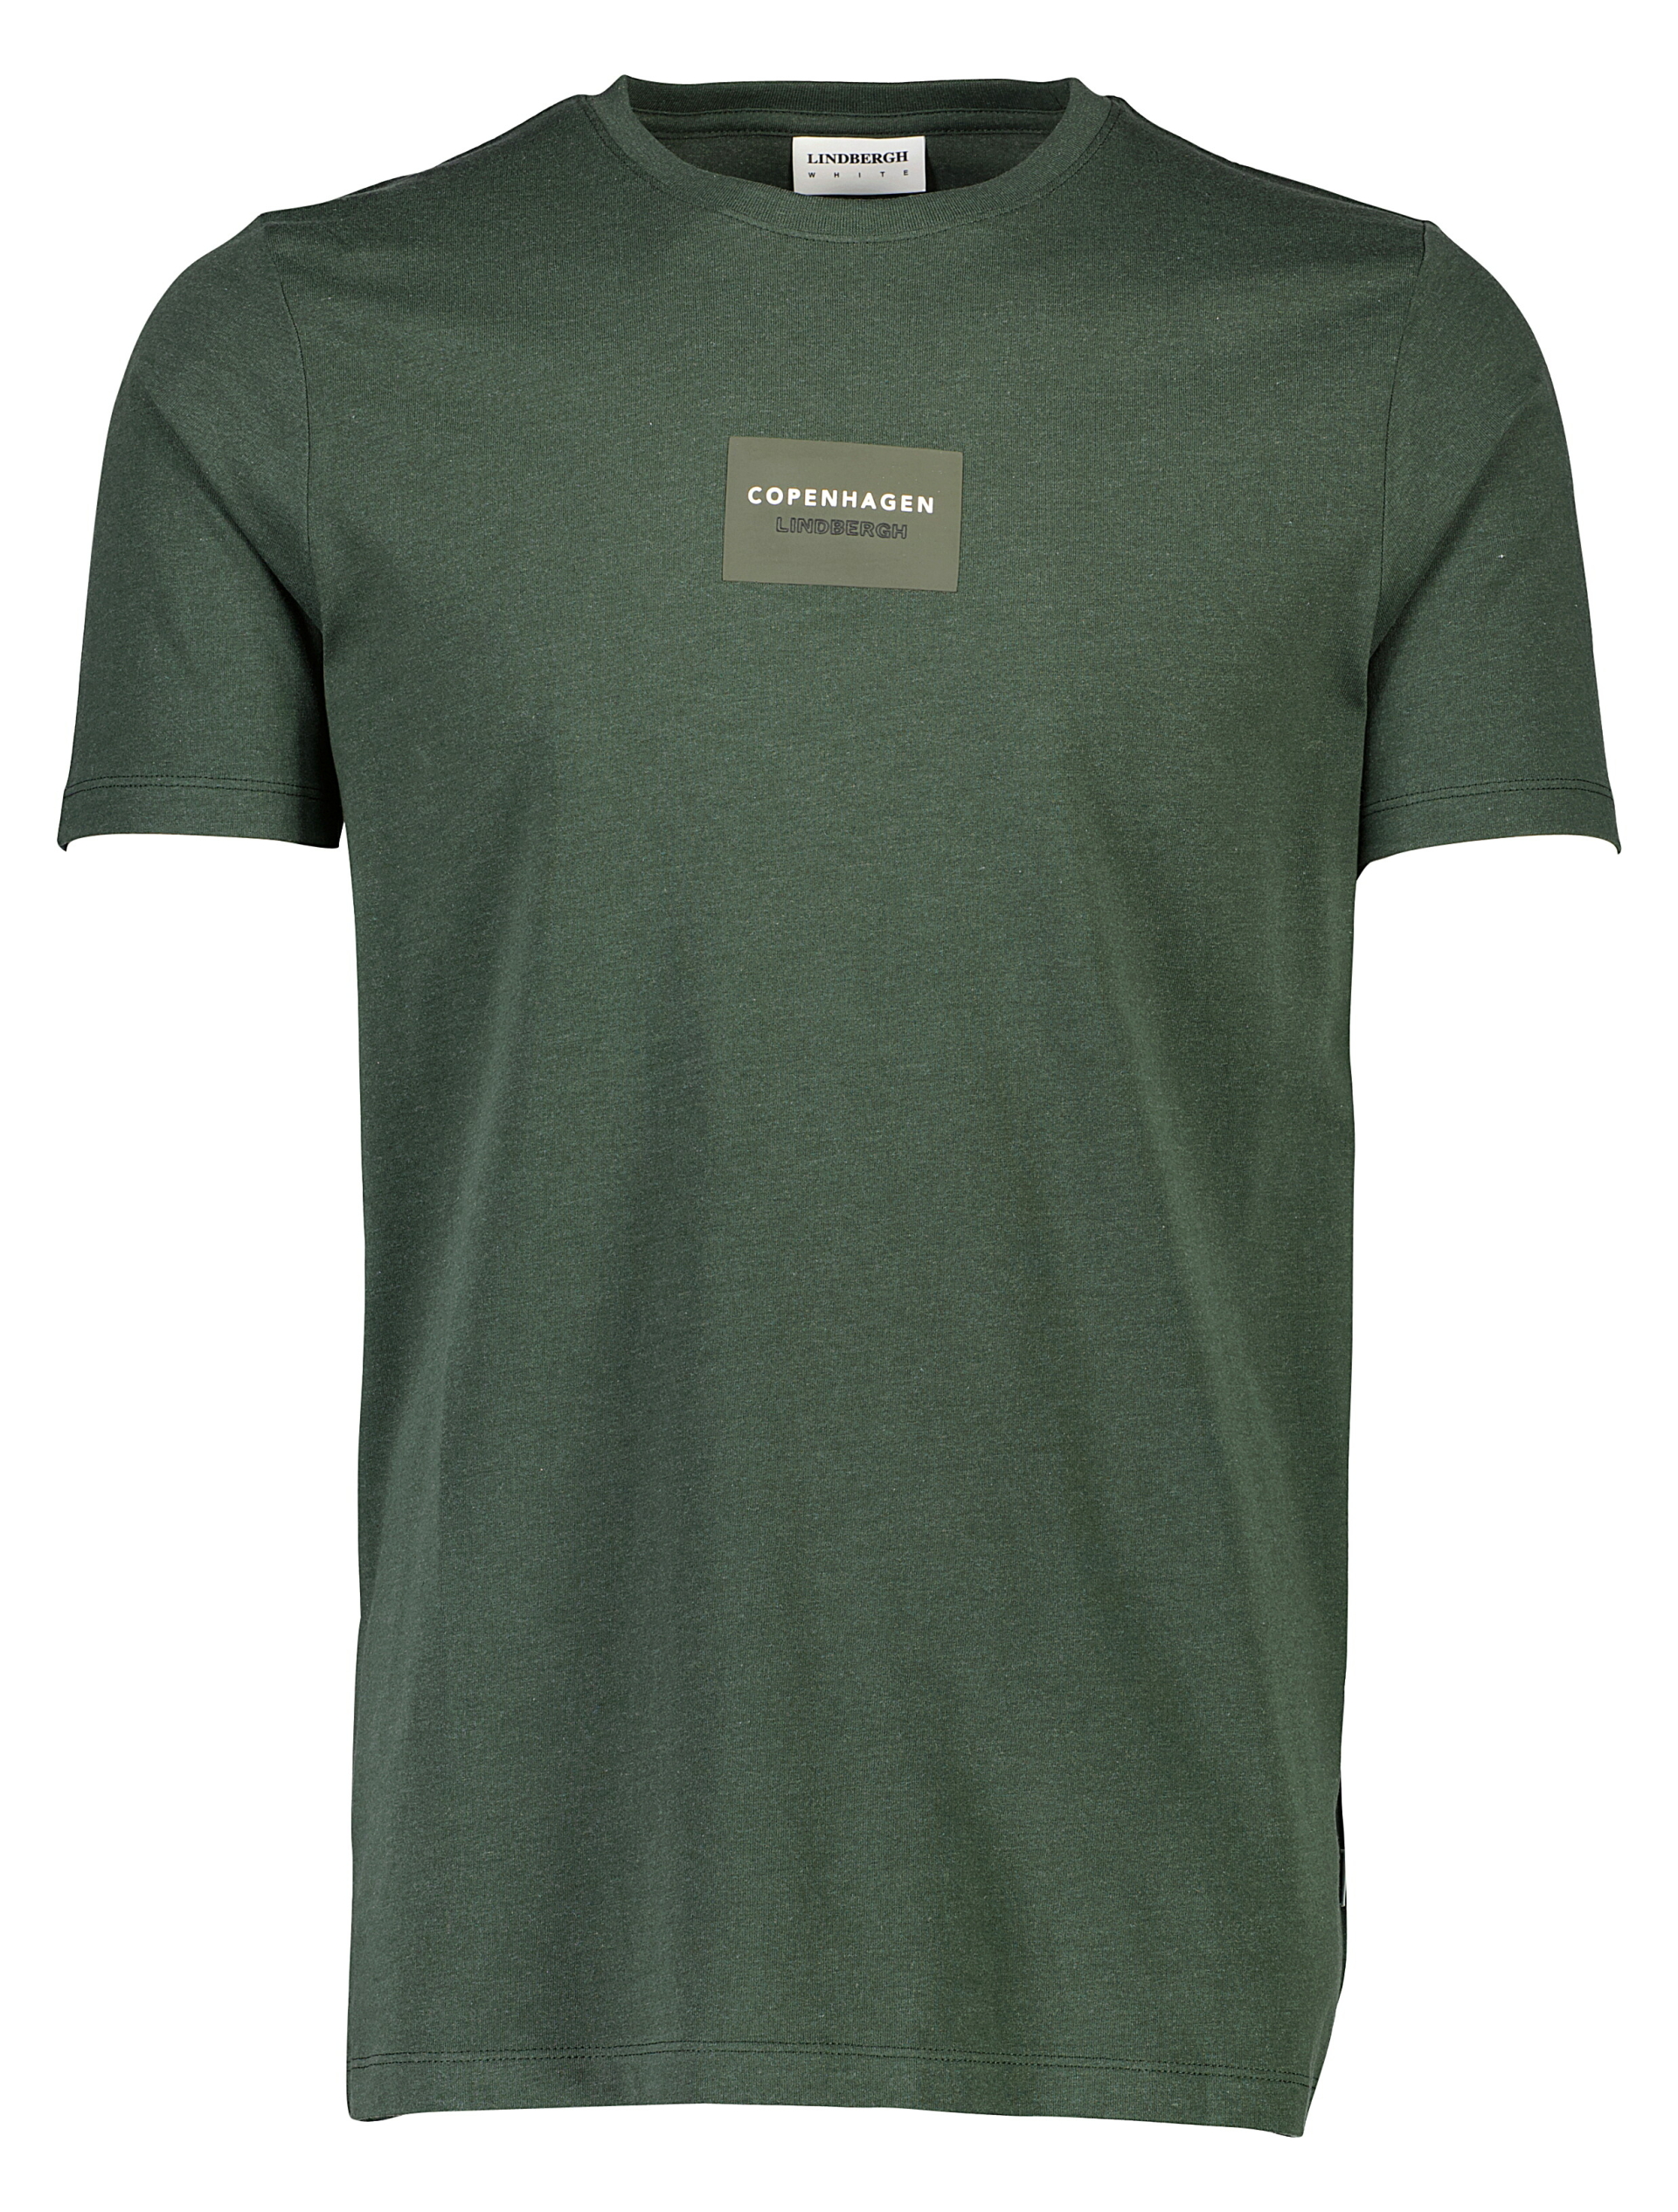 Lindbergh T-shirt grön / green mel